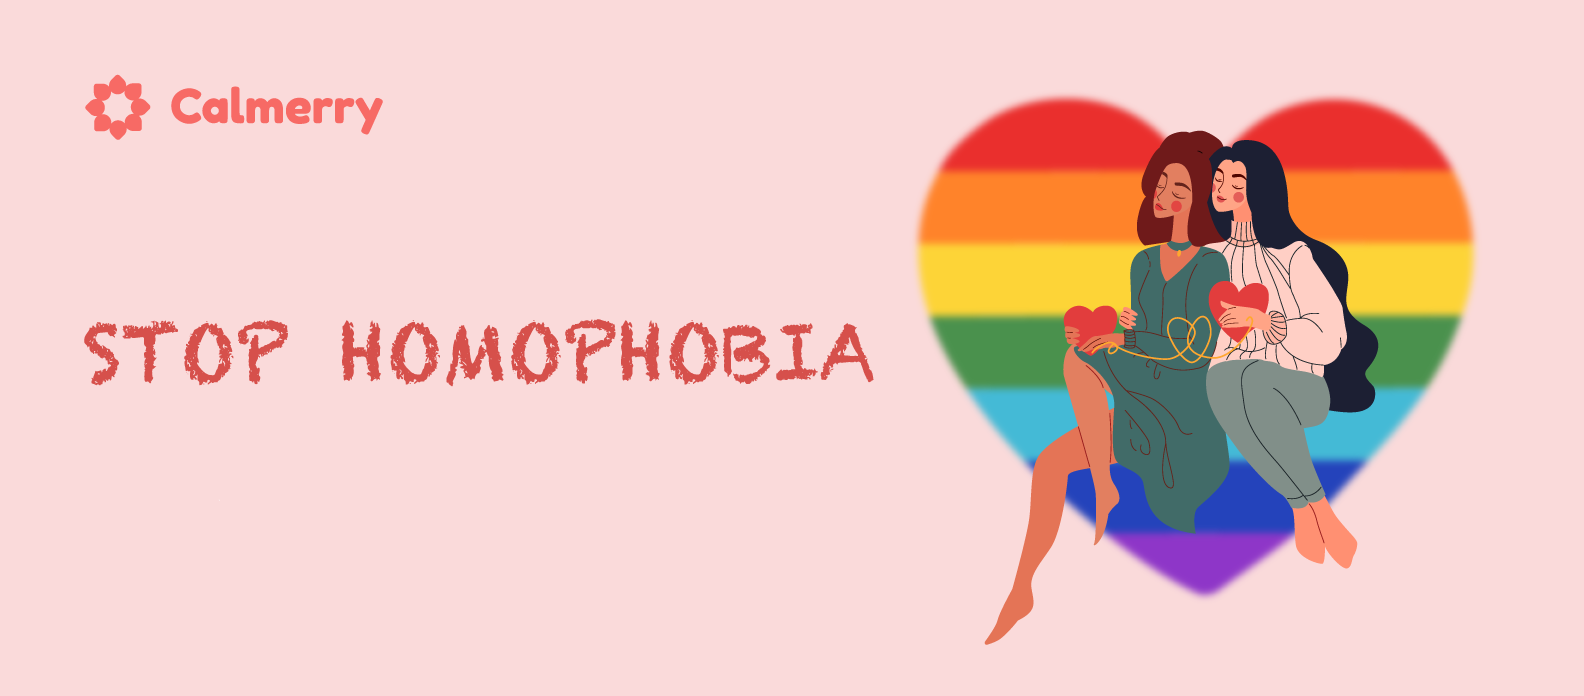 stop homophobia